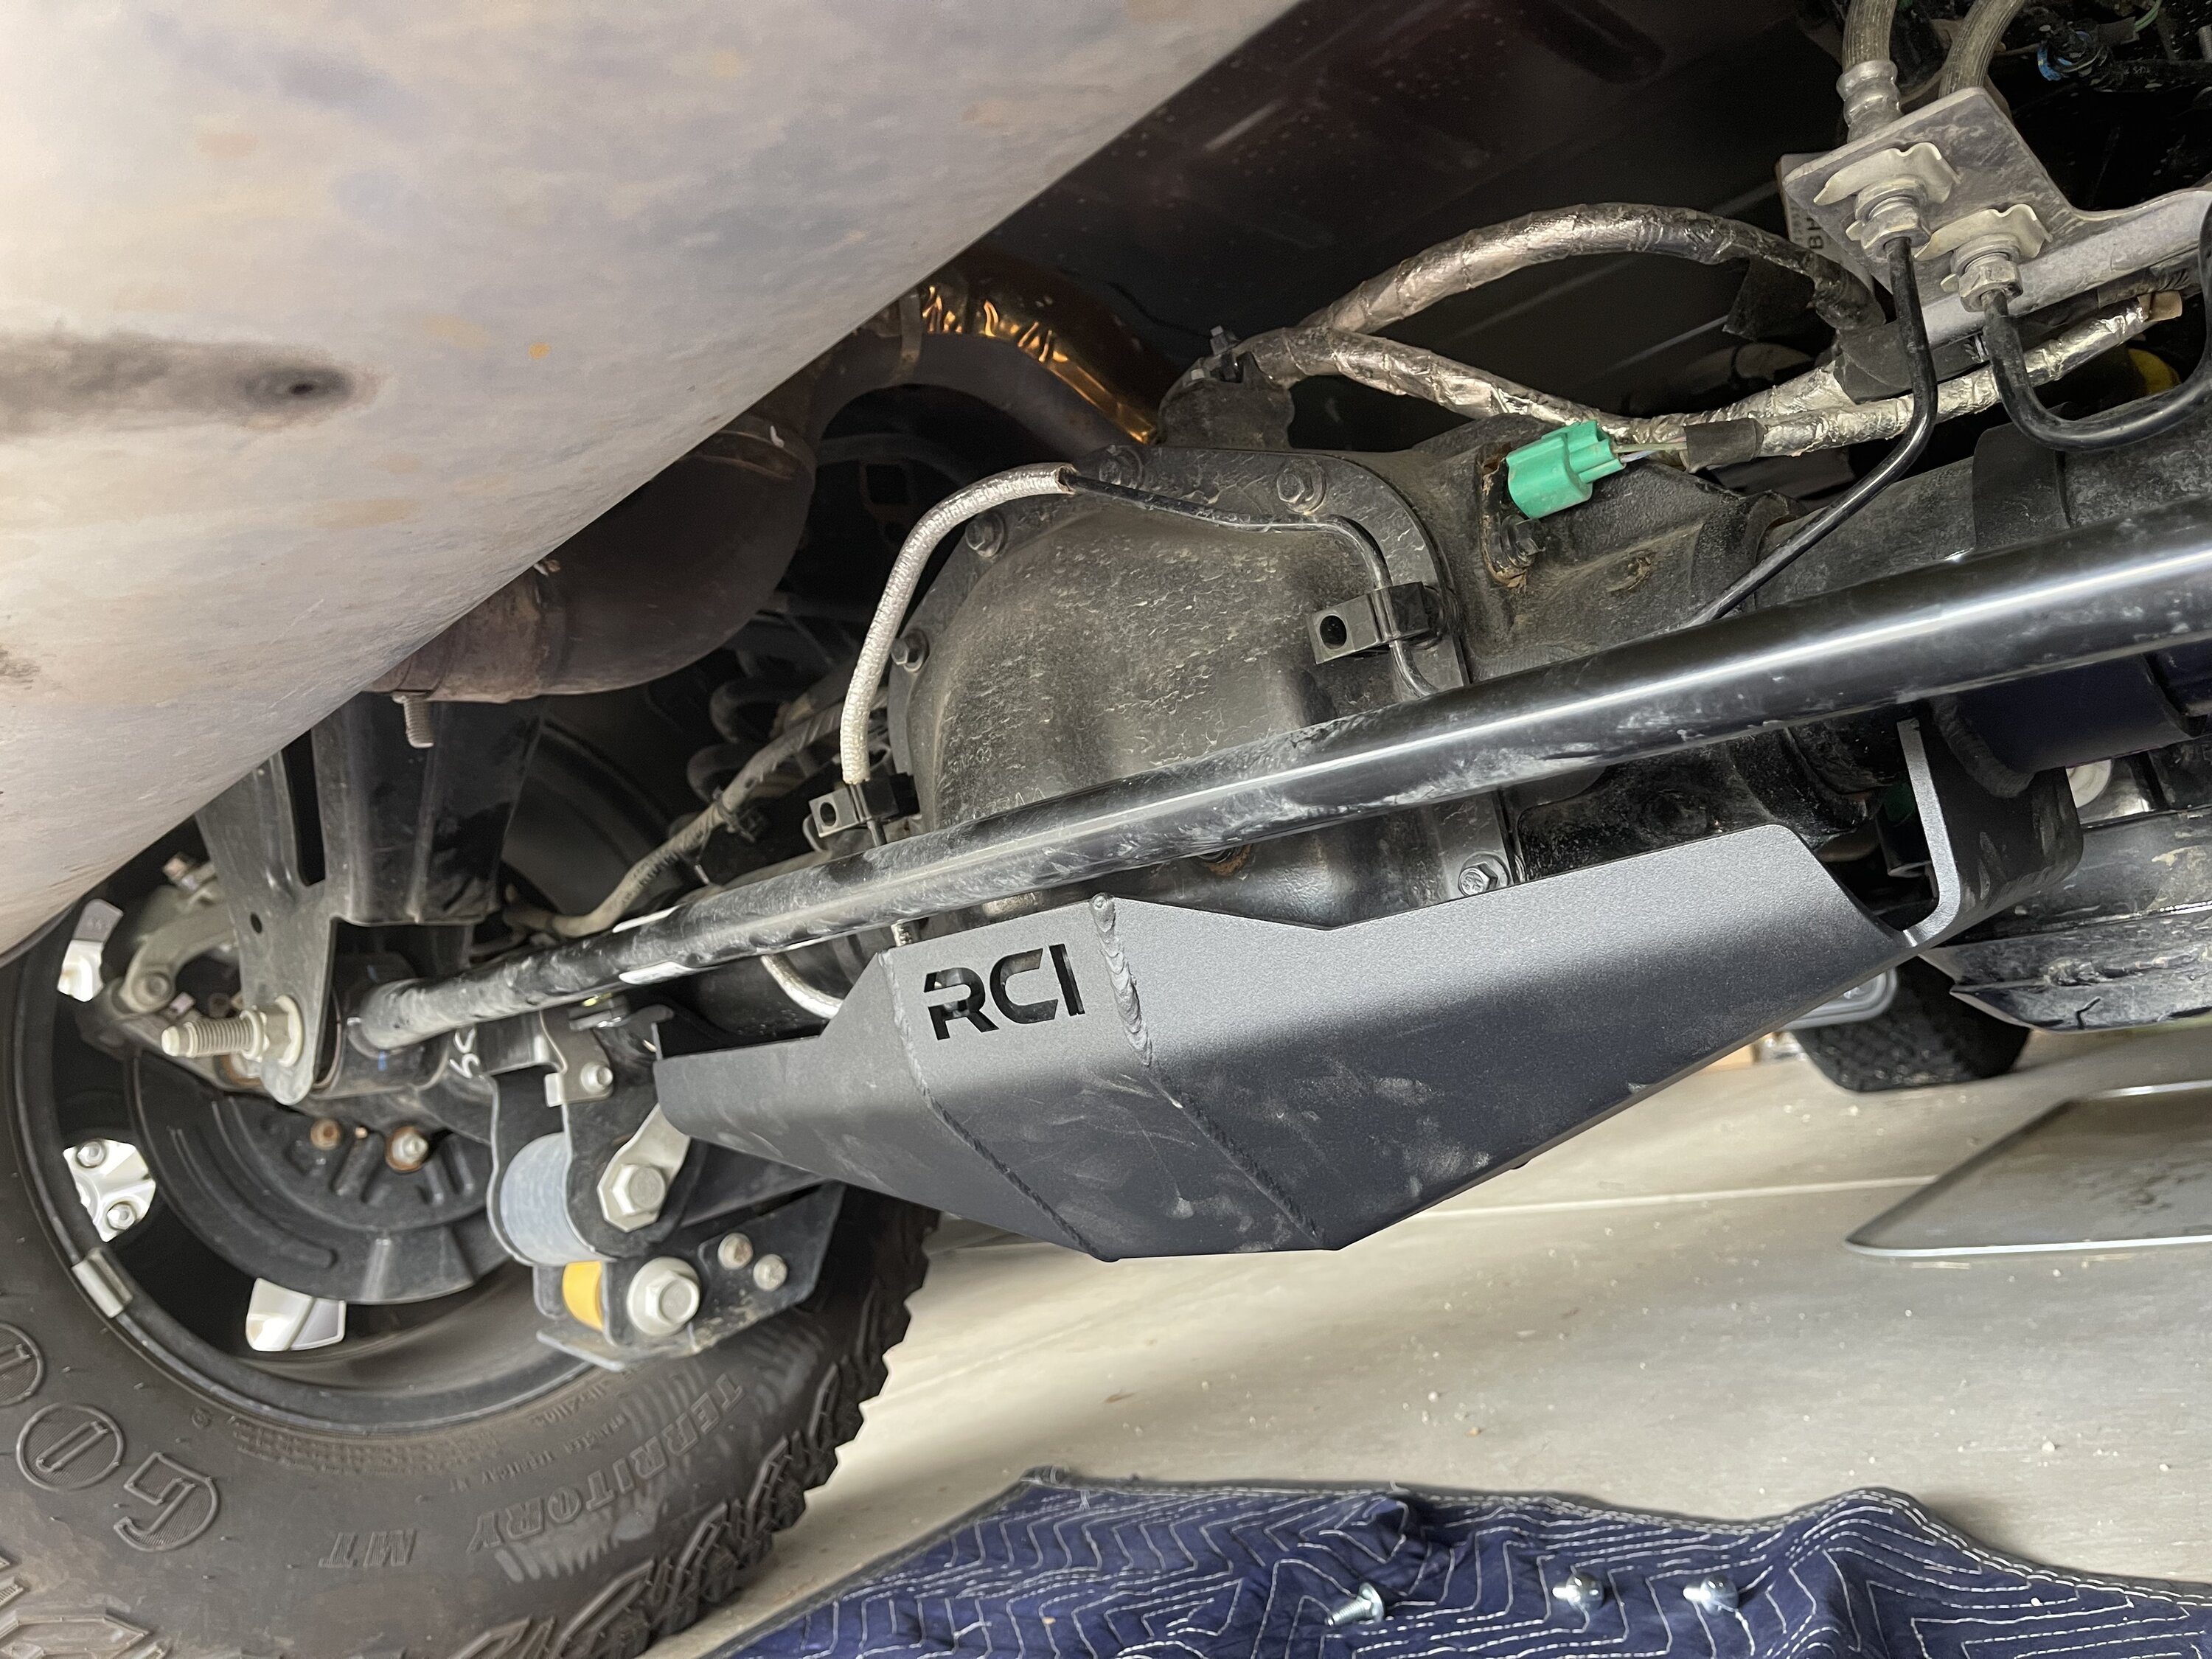 Ford Bronco RCI Rear Differential Skid Plate! 8A4596B4-C16A-4B4A-96A3-D29F8C67AE7B